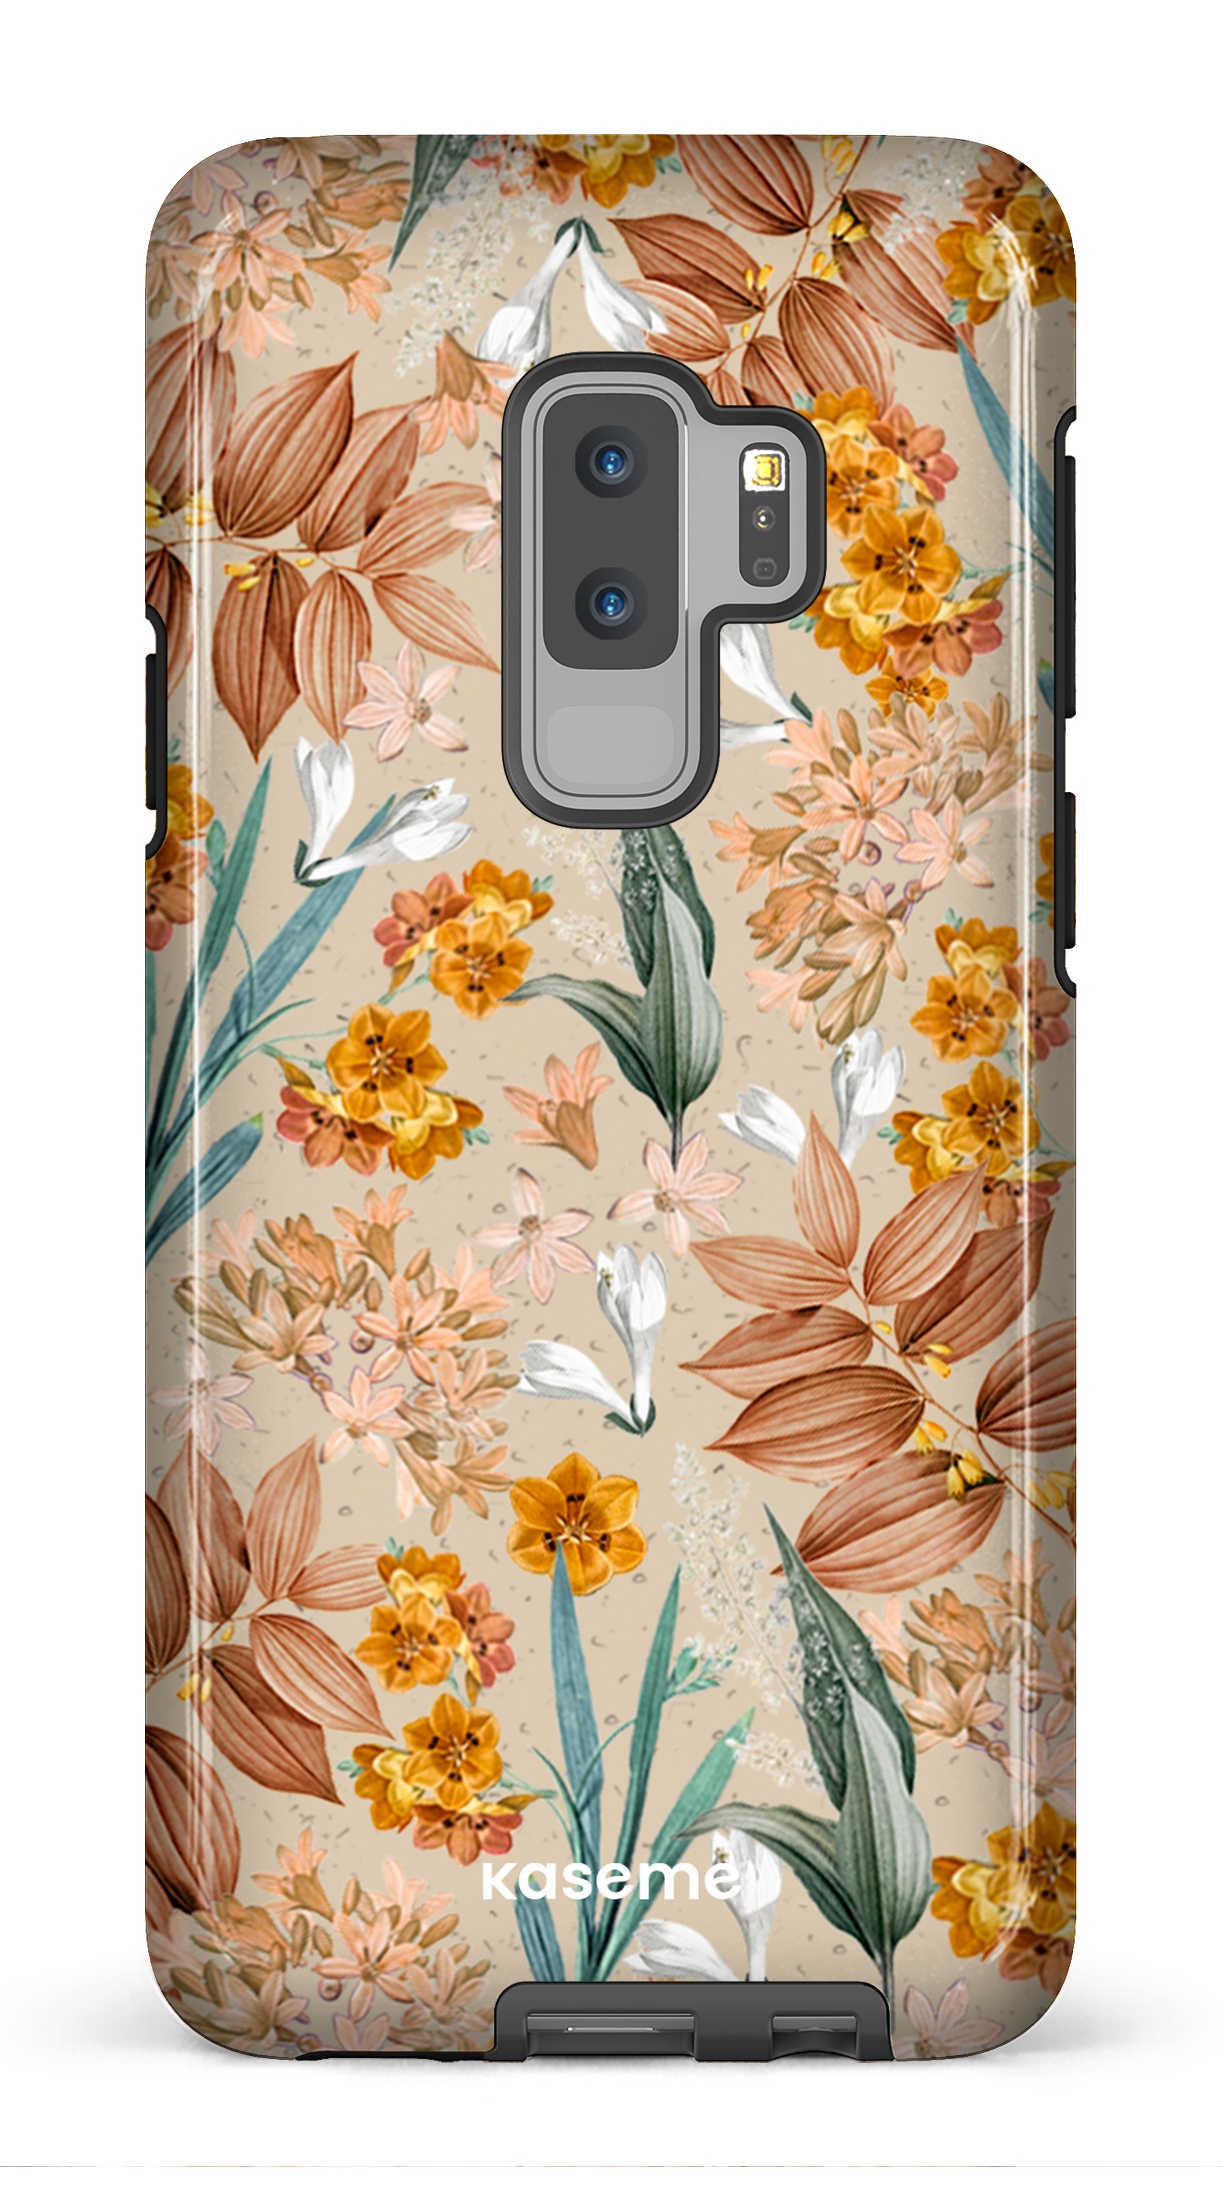 Autumn Leaves - Galaxy S9 Plus